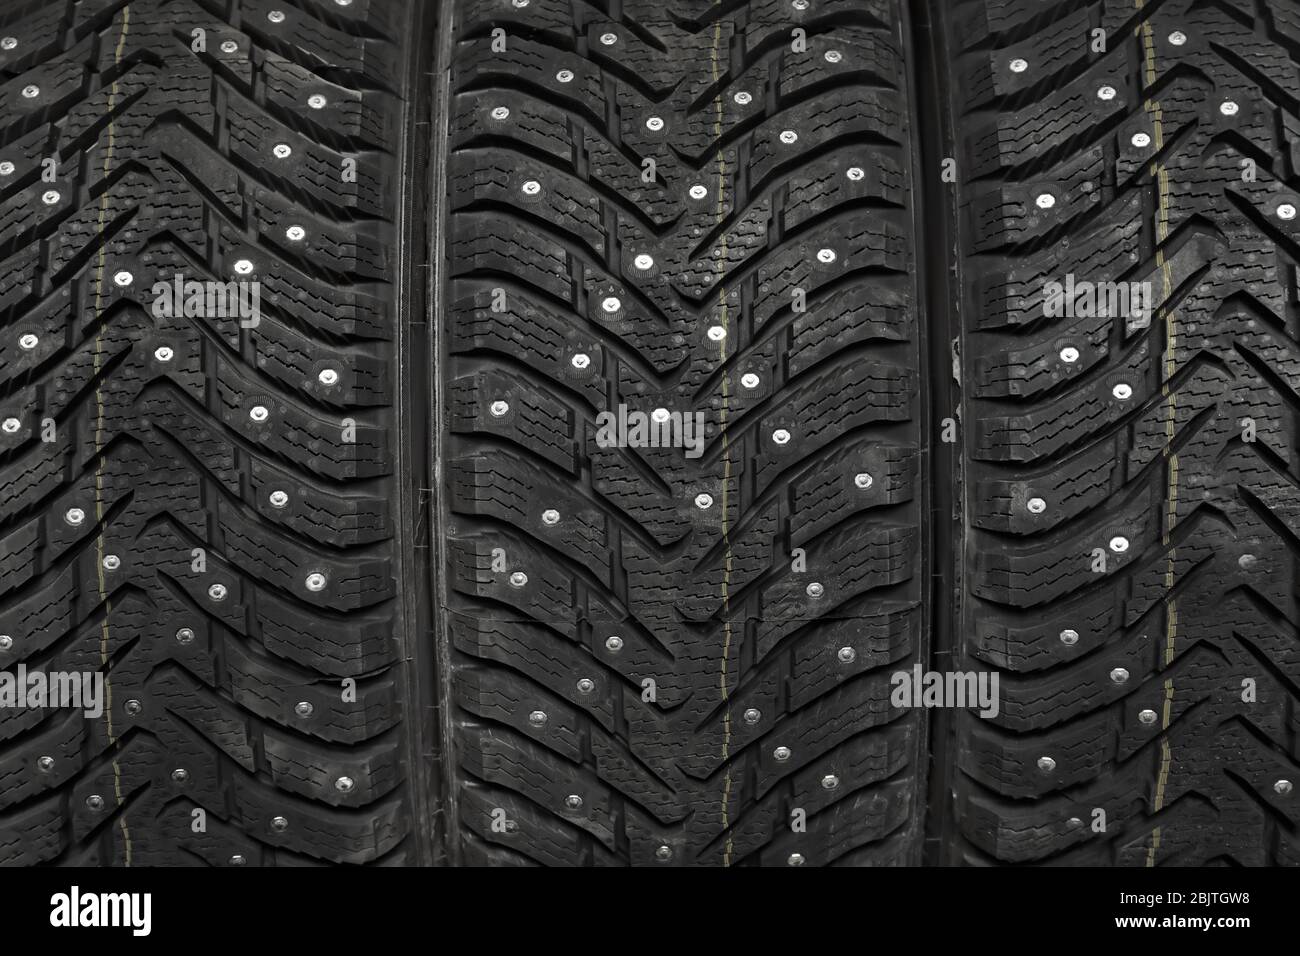 Closeup view of car tires with metal studs Stock Photo